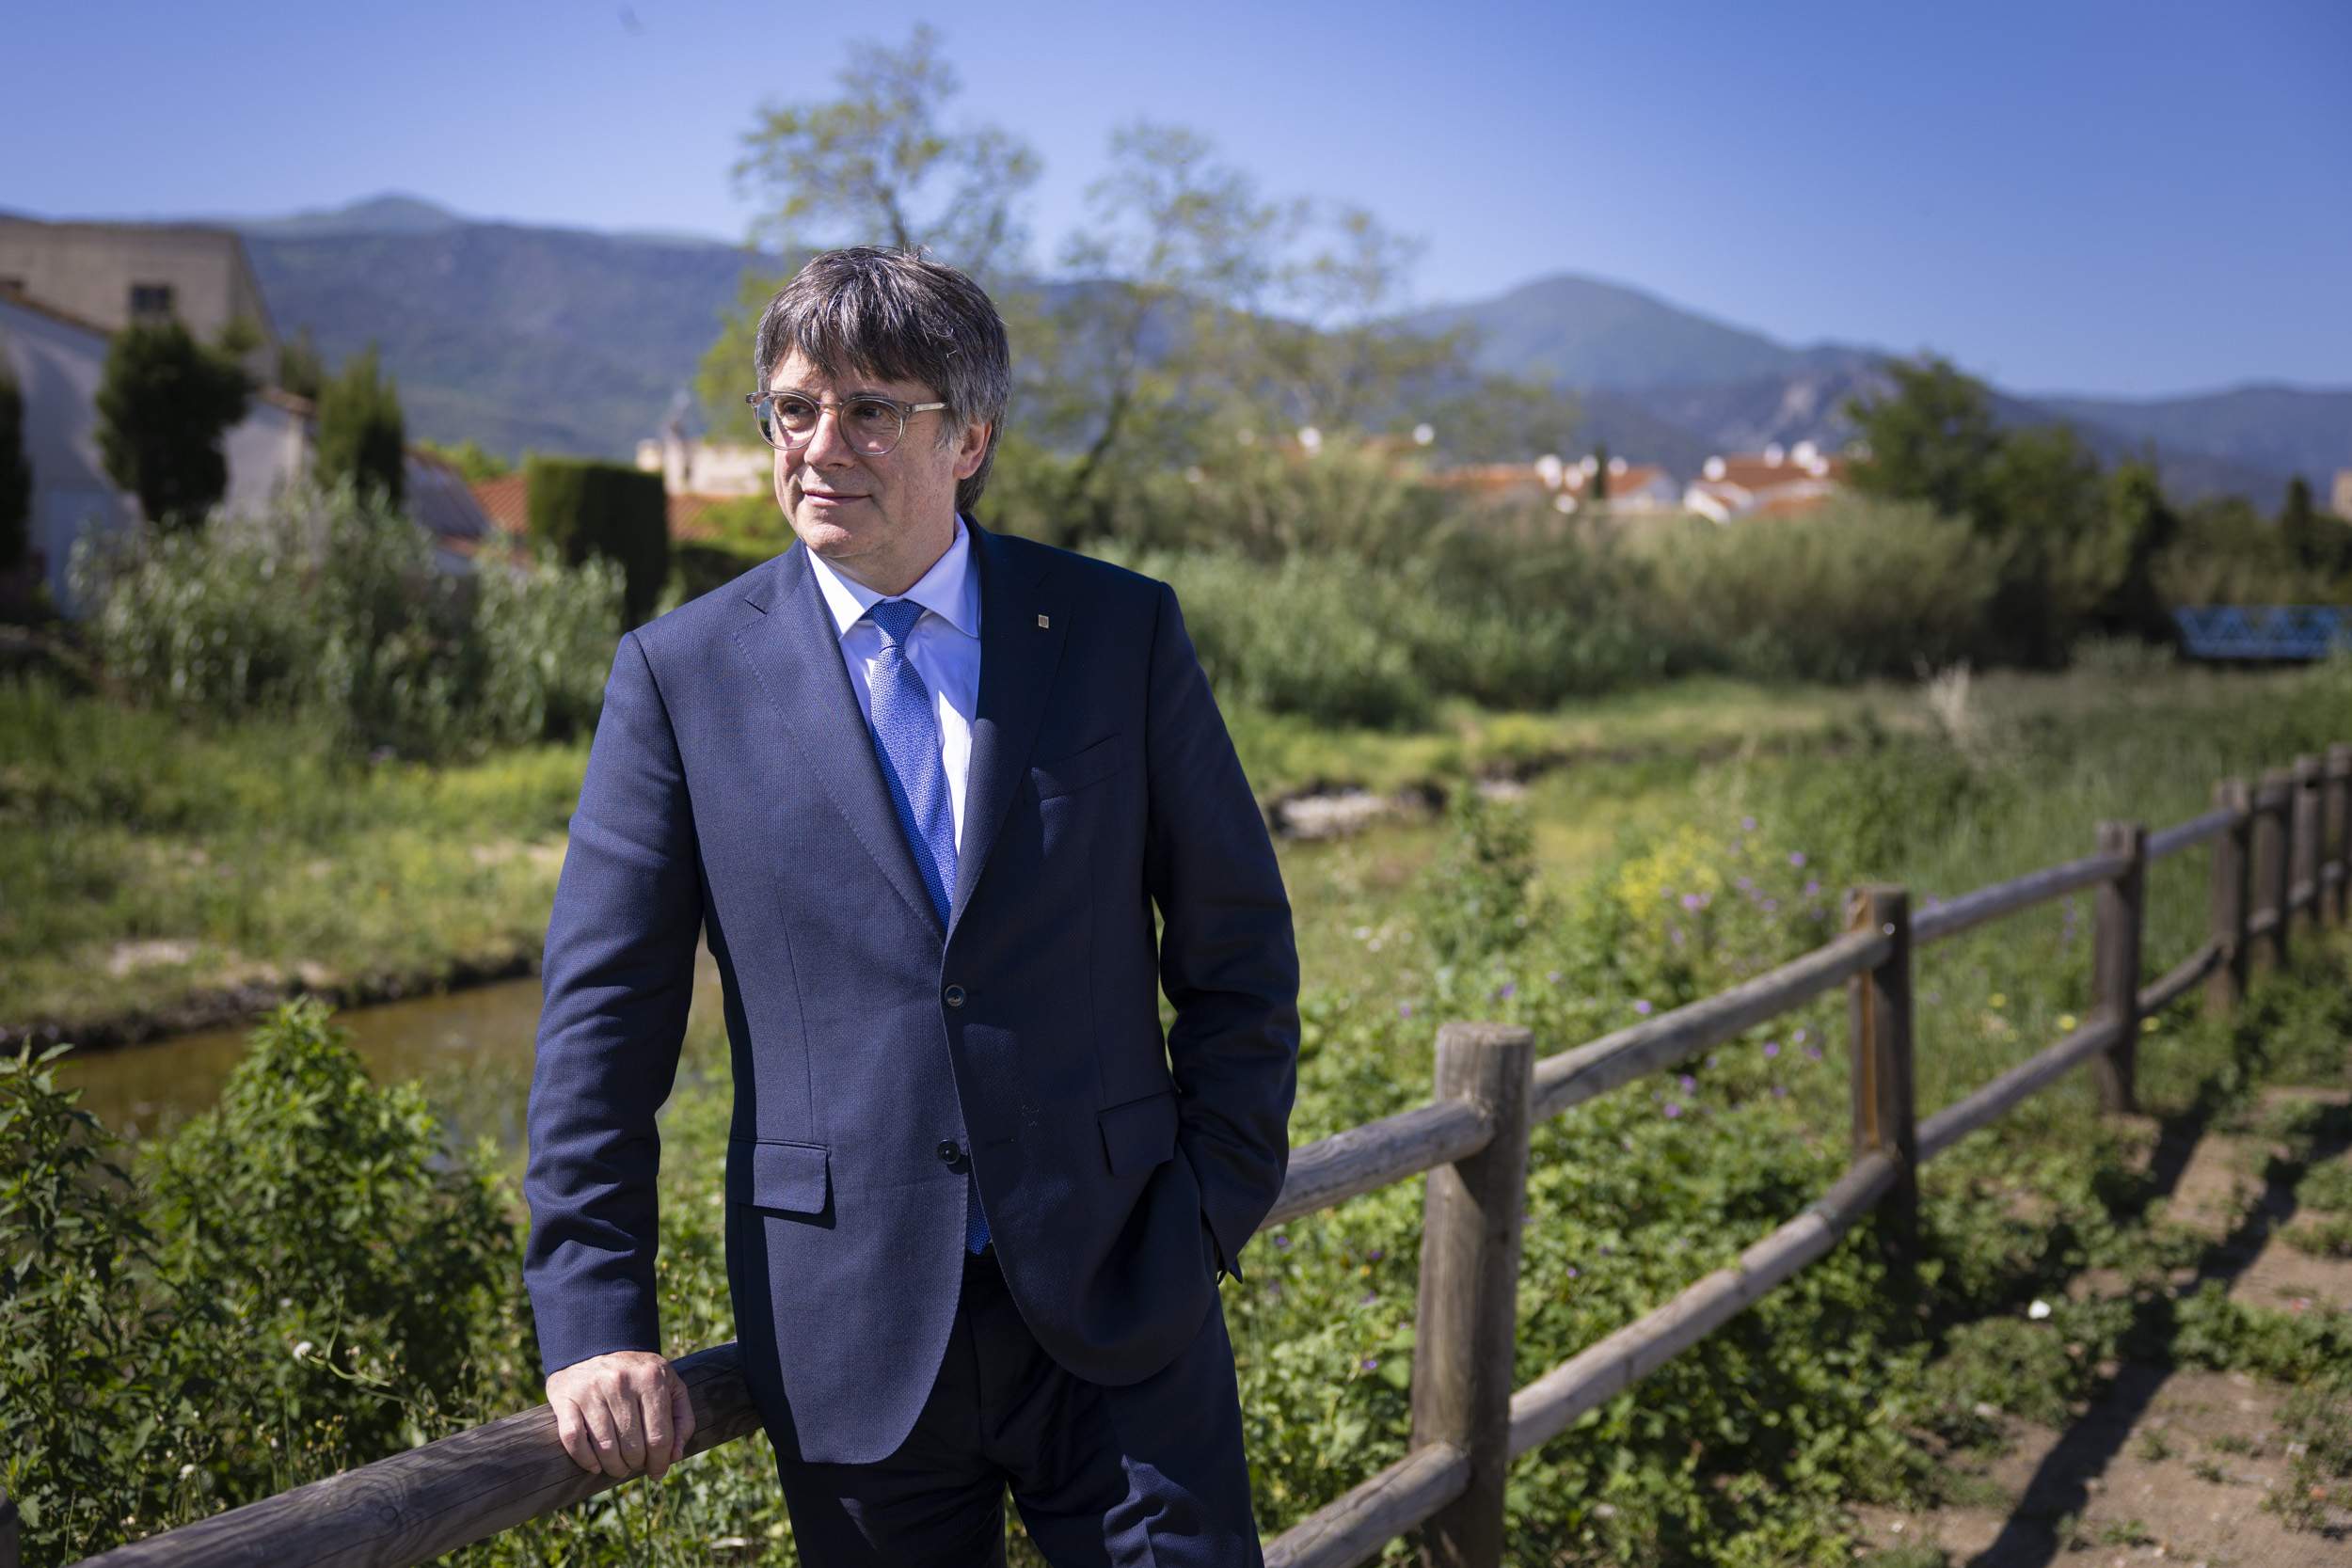 Entrevista Carles Puigdemont a Argelers - Foto: Montse Giralt